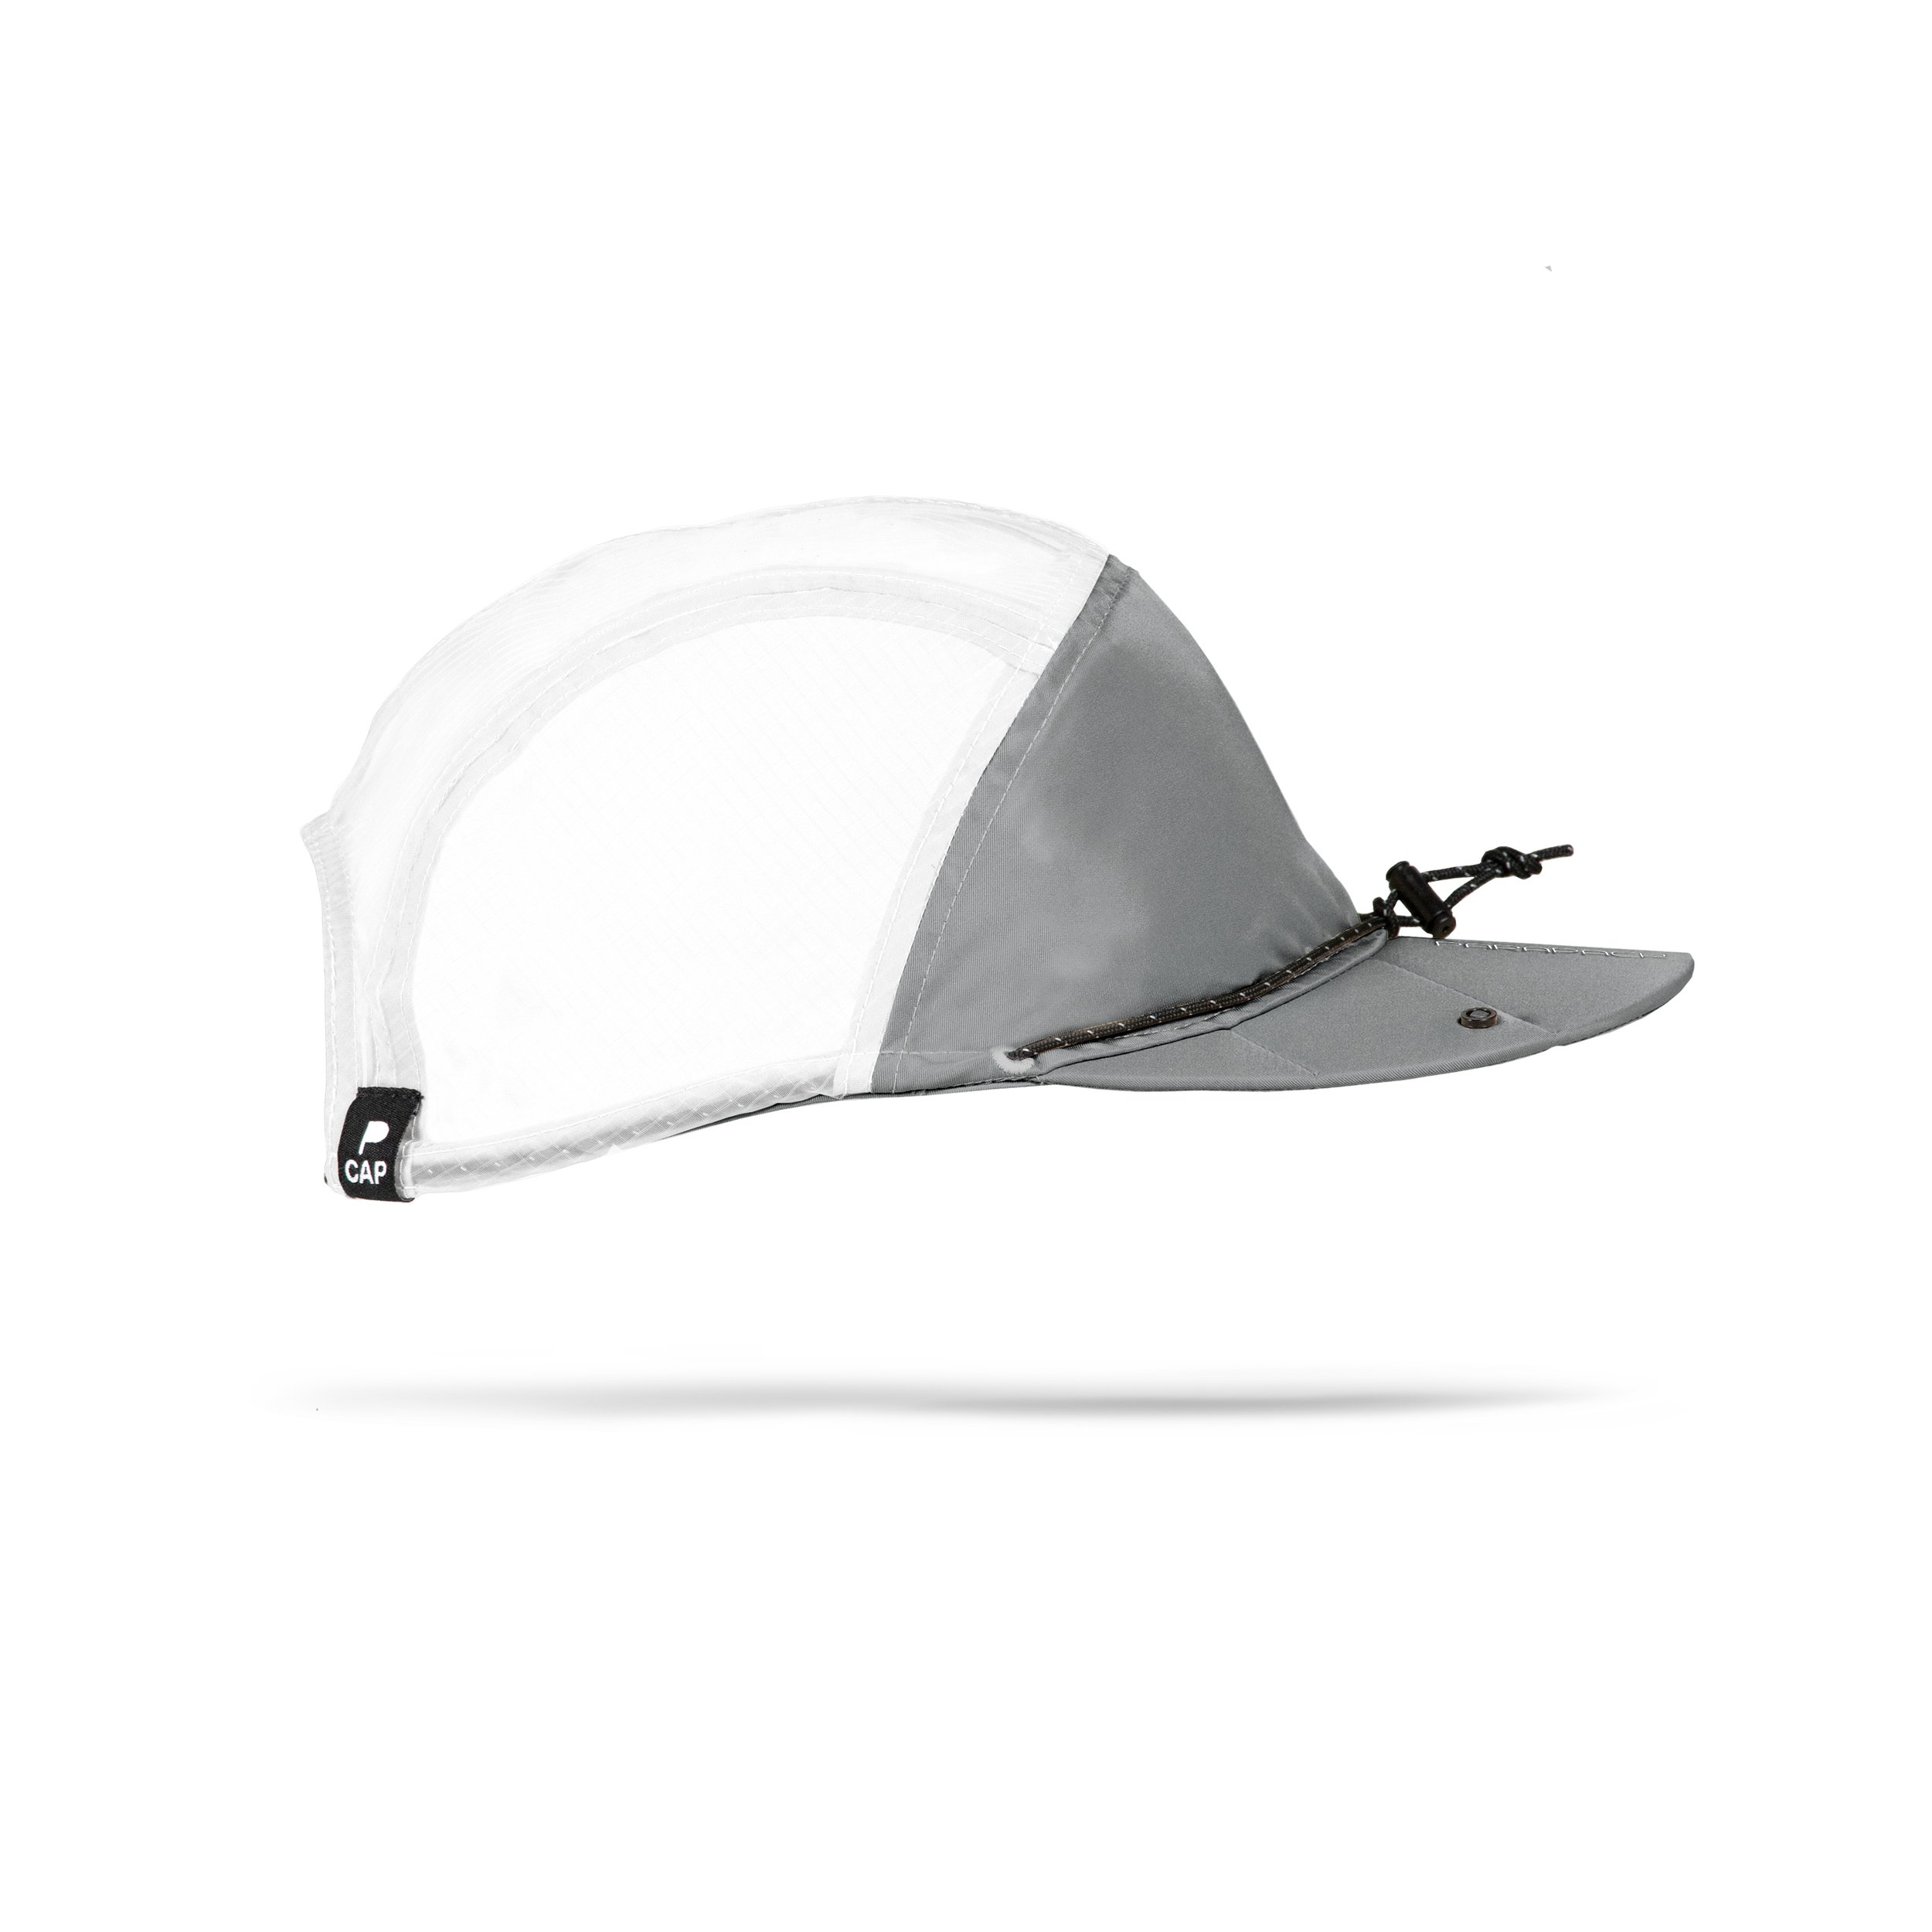 Parapack P-Cap Lite | Charcoal | Ultra-lightweight packable